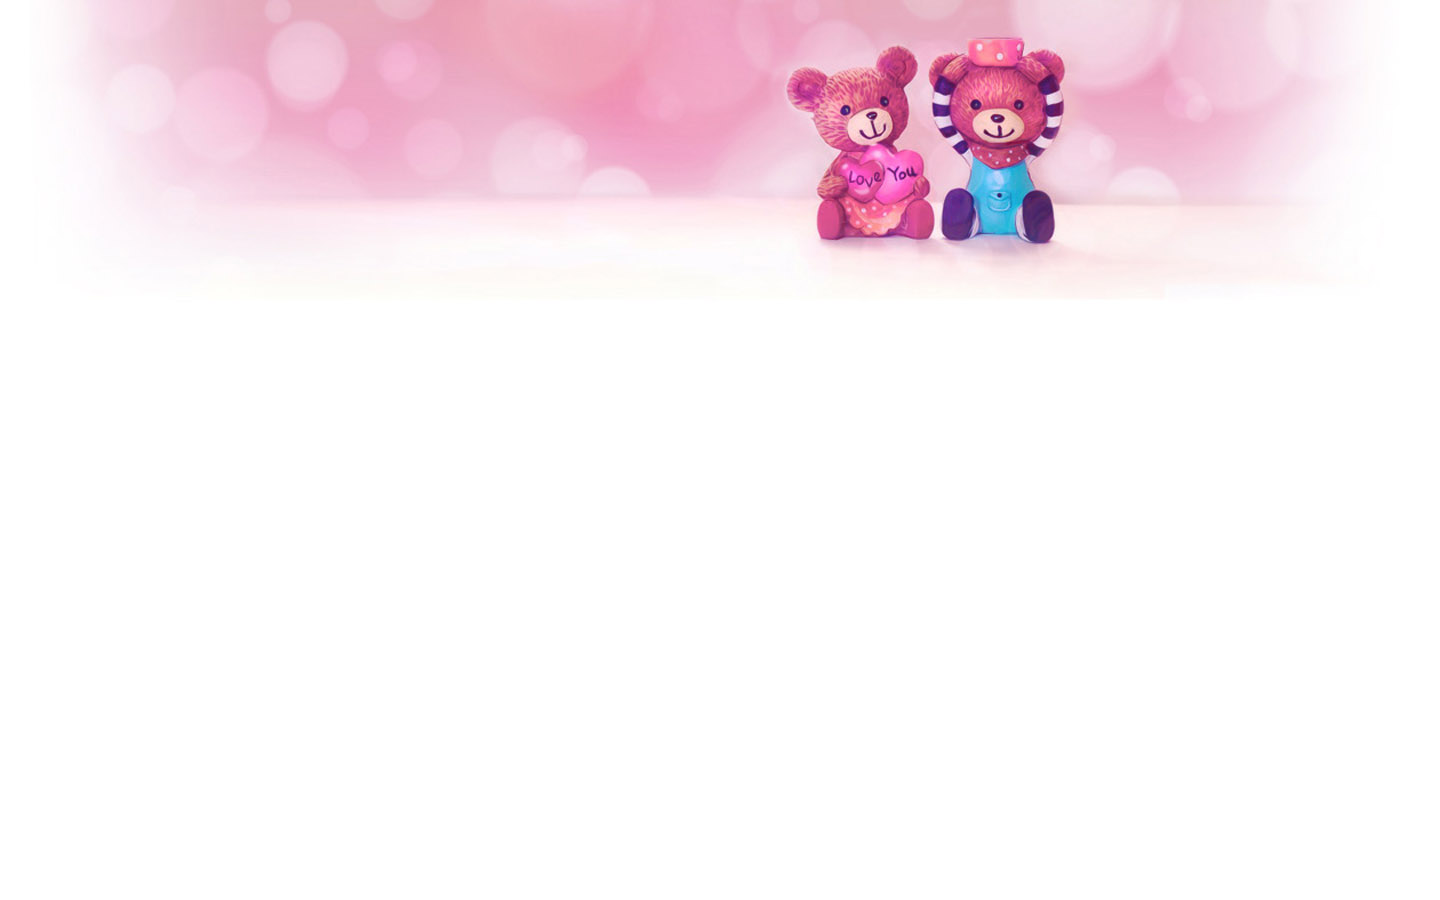 love you bear desktop background